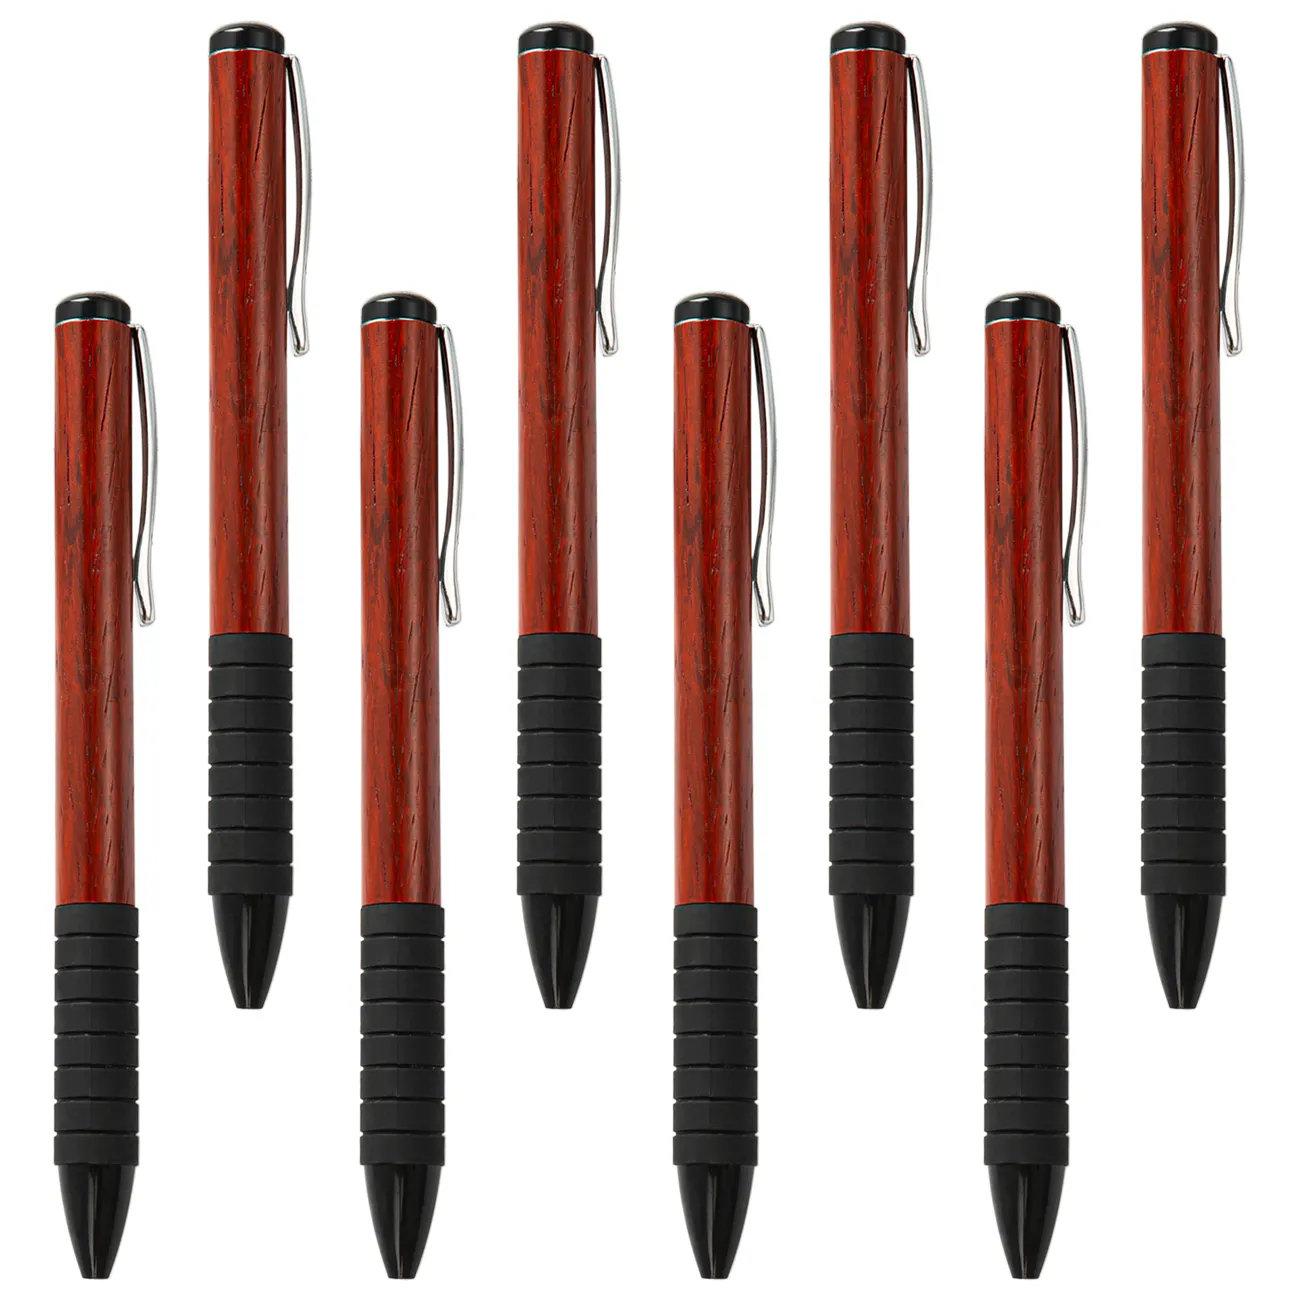 थोक बांस पर्यावरण अनुकूलित ballpoint कलम लकड़ी बहु रंग क्लिप और मुद्रित कस्टम लोगो के साथ बॉल पेन